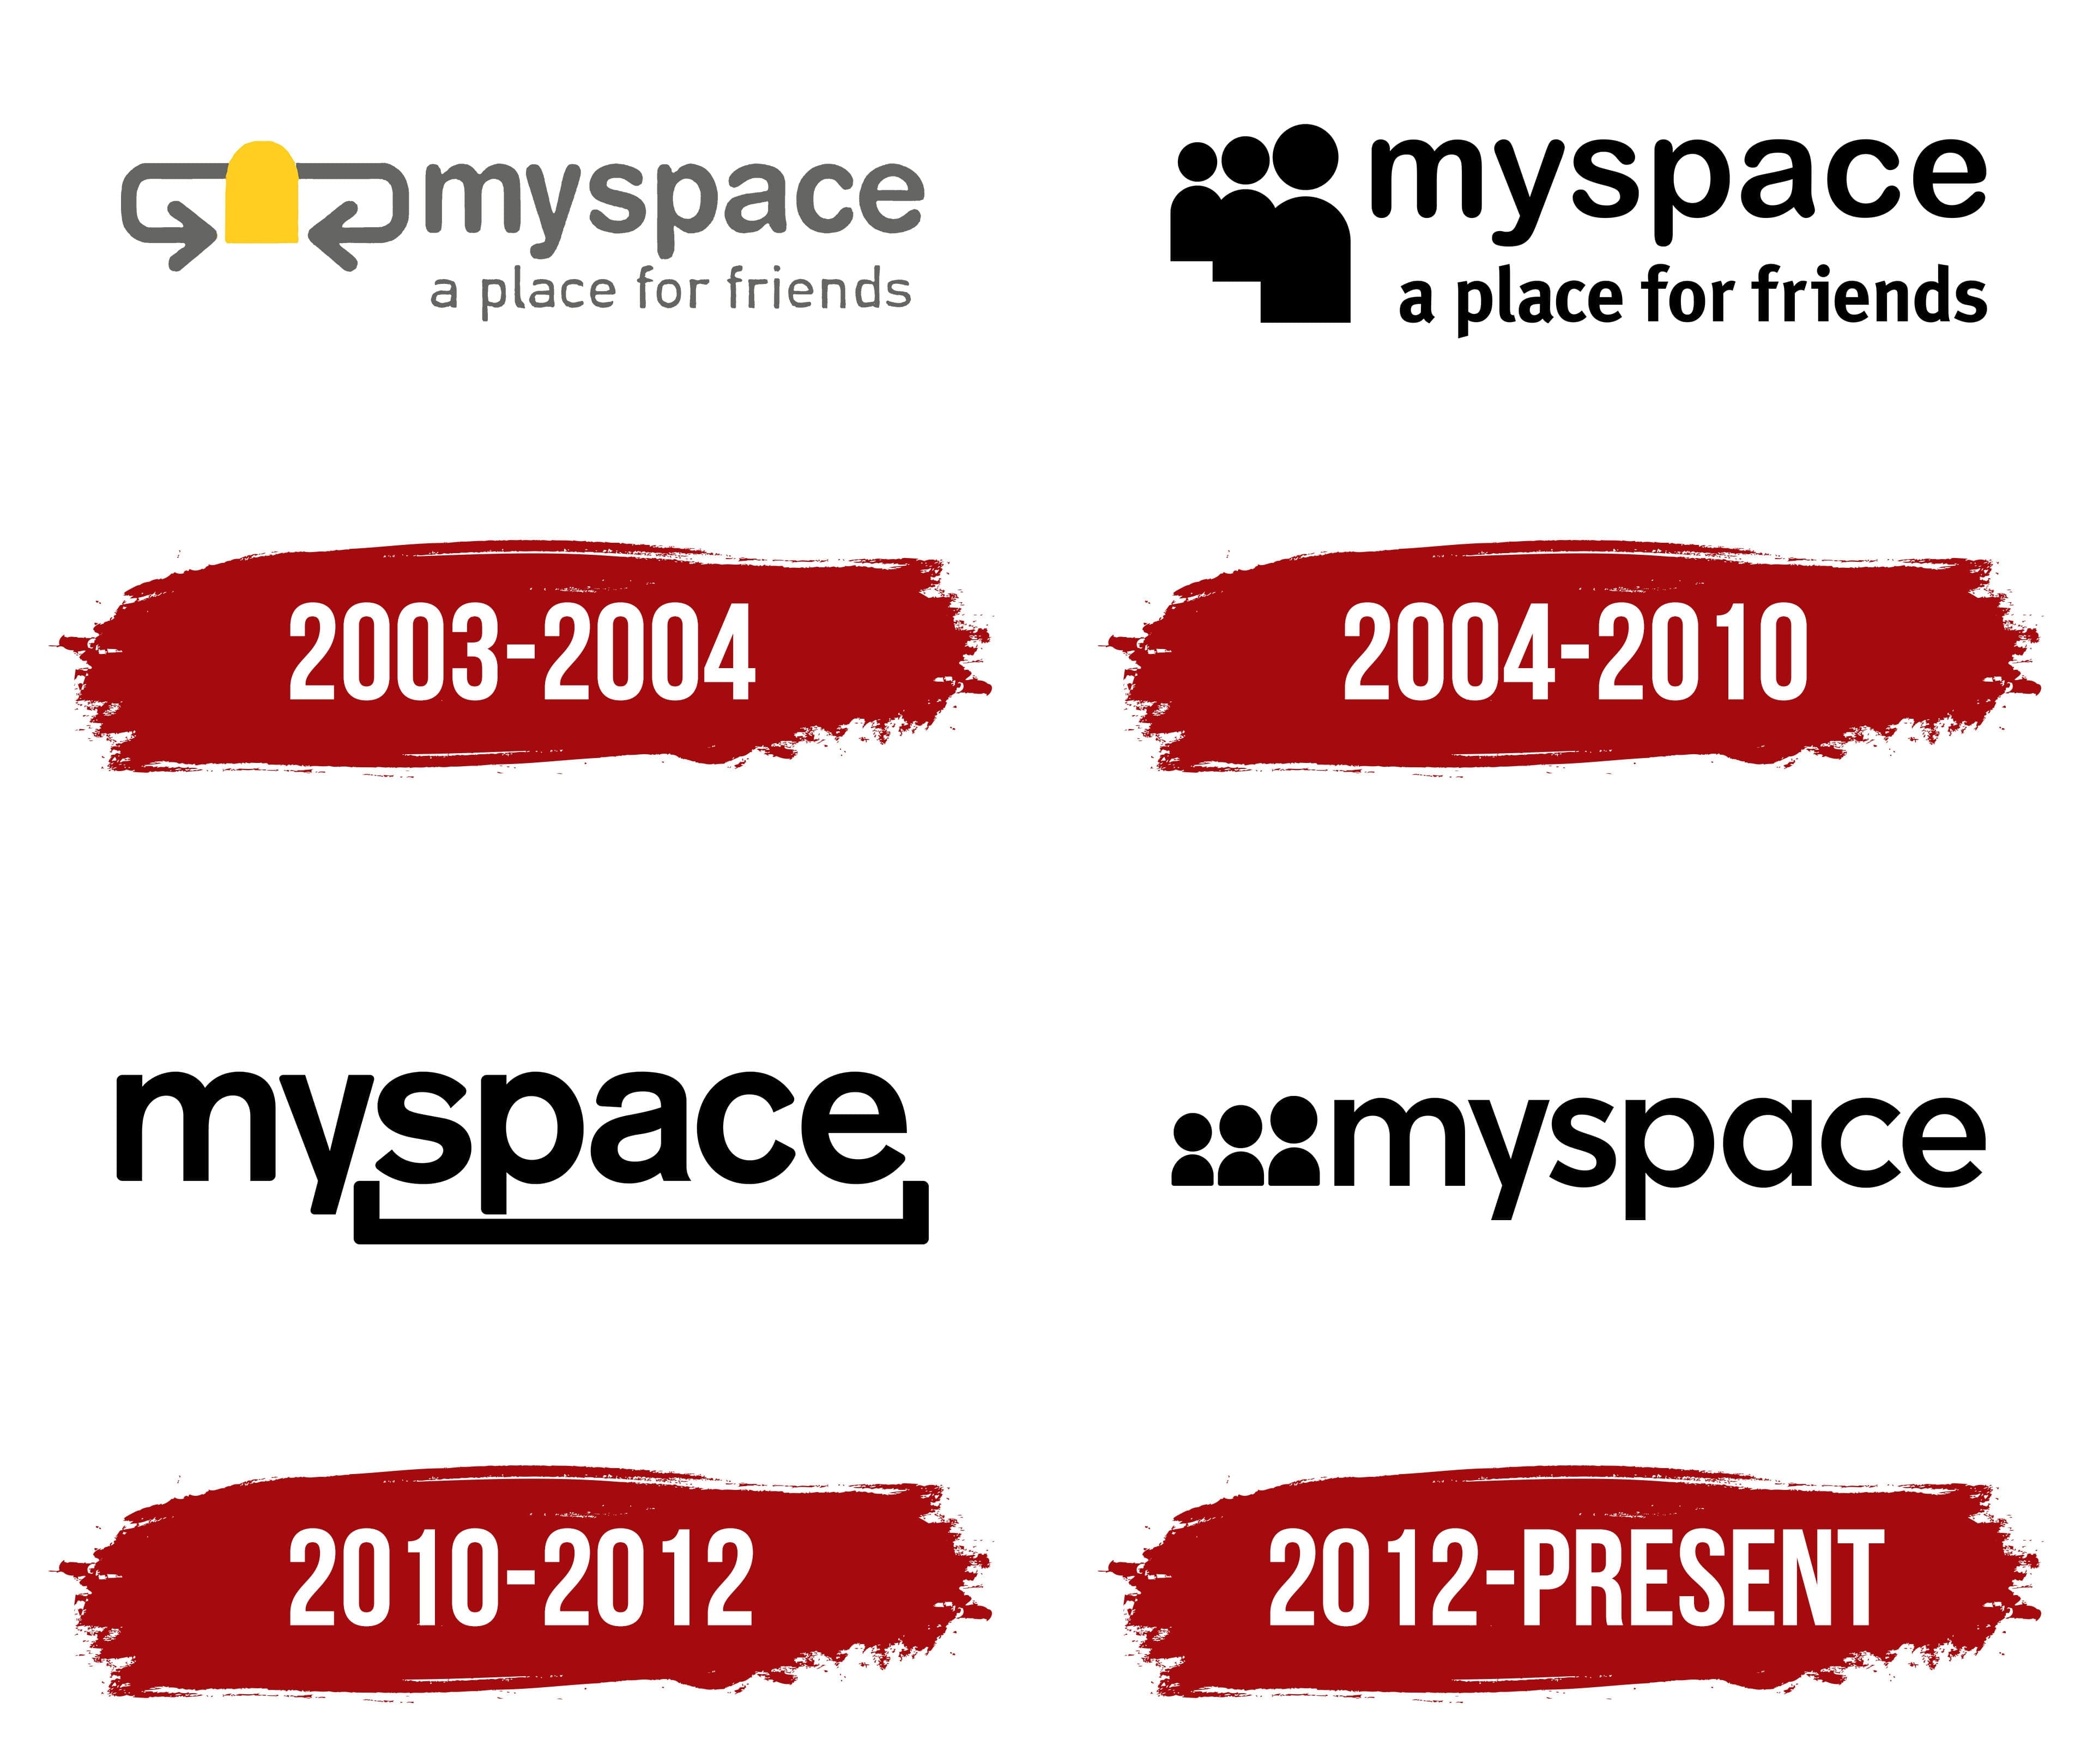 myspace logo 2022